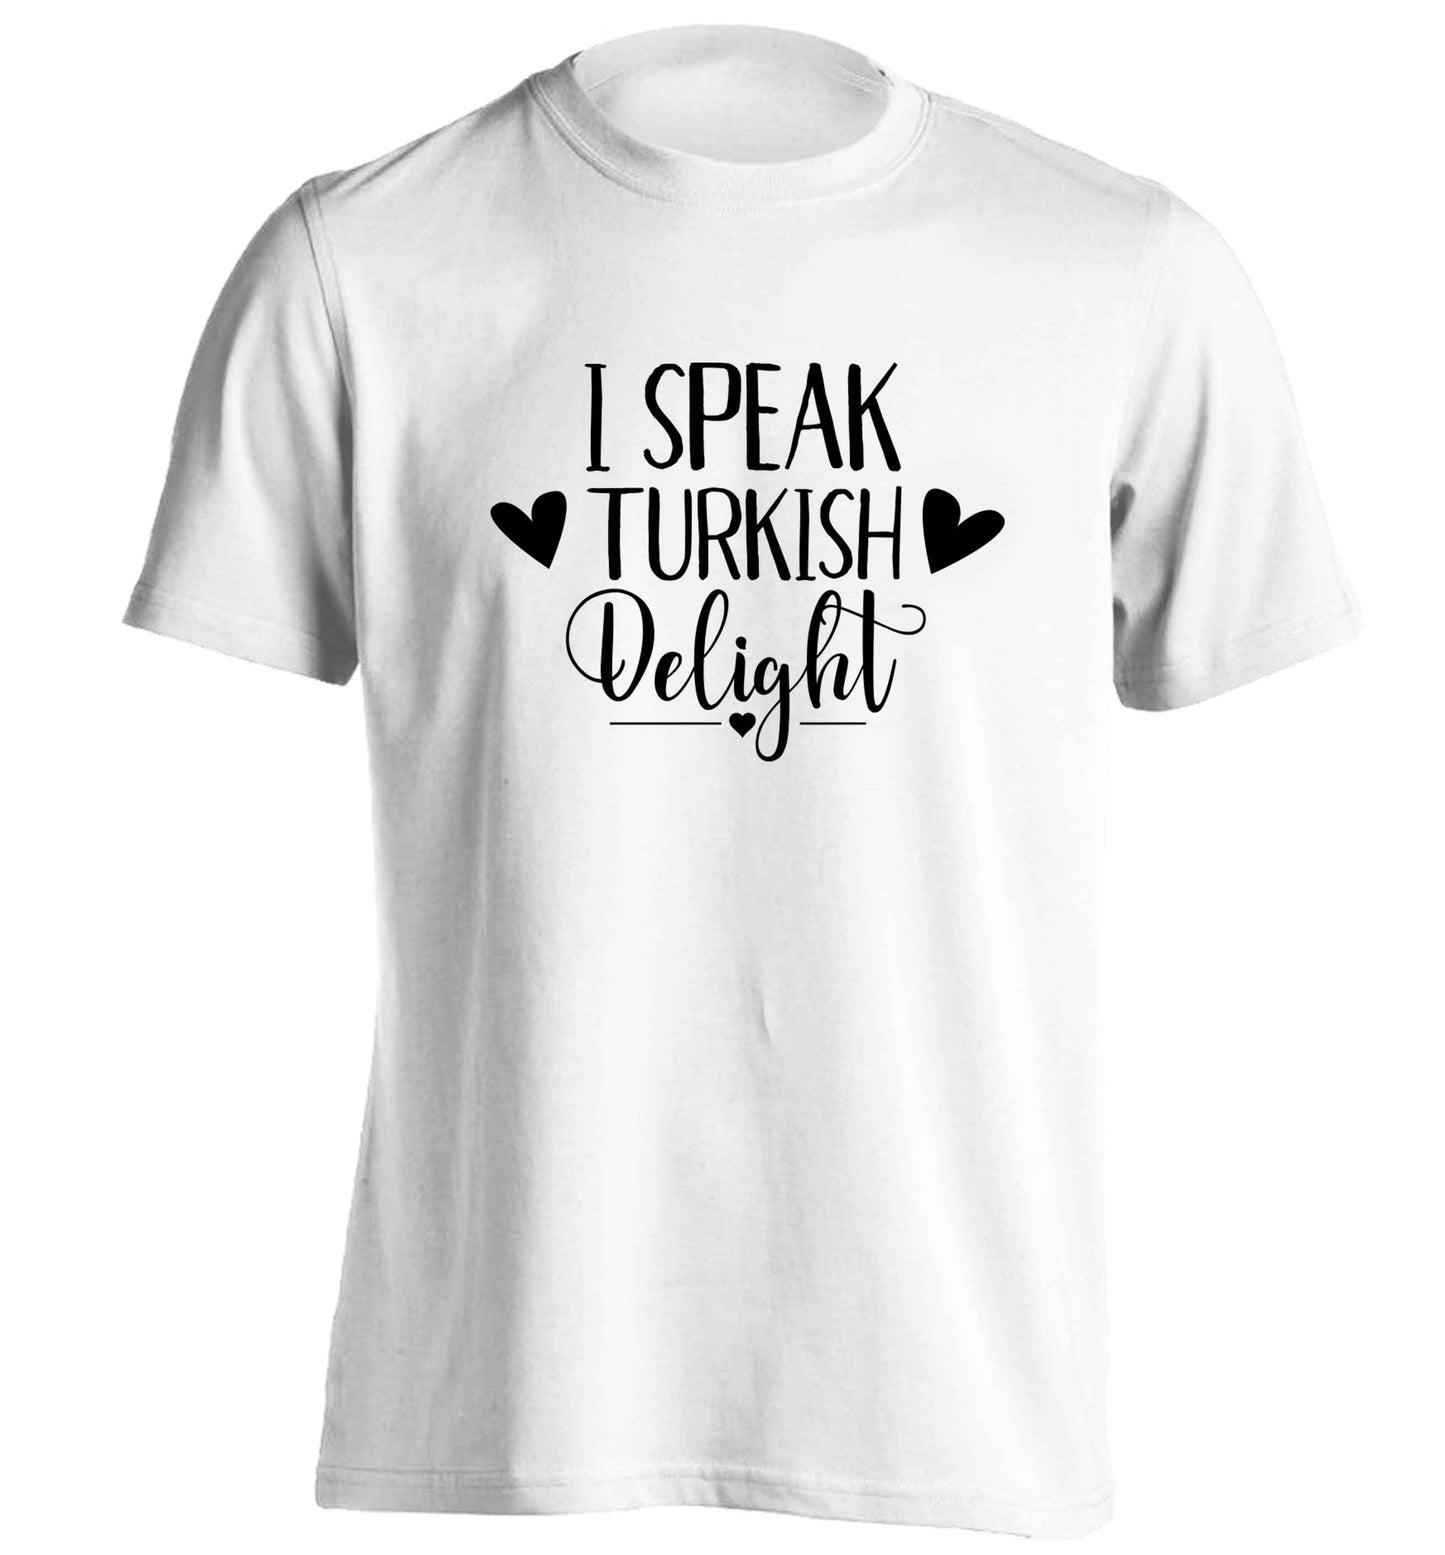 I speak turkish...delight adults unisex white Tshirt 2XL